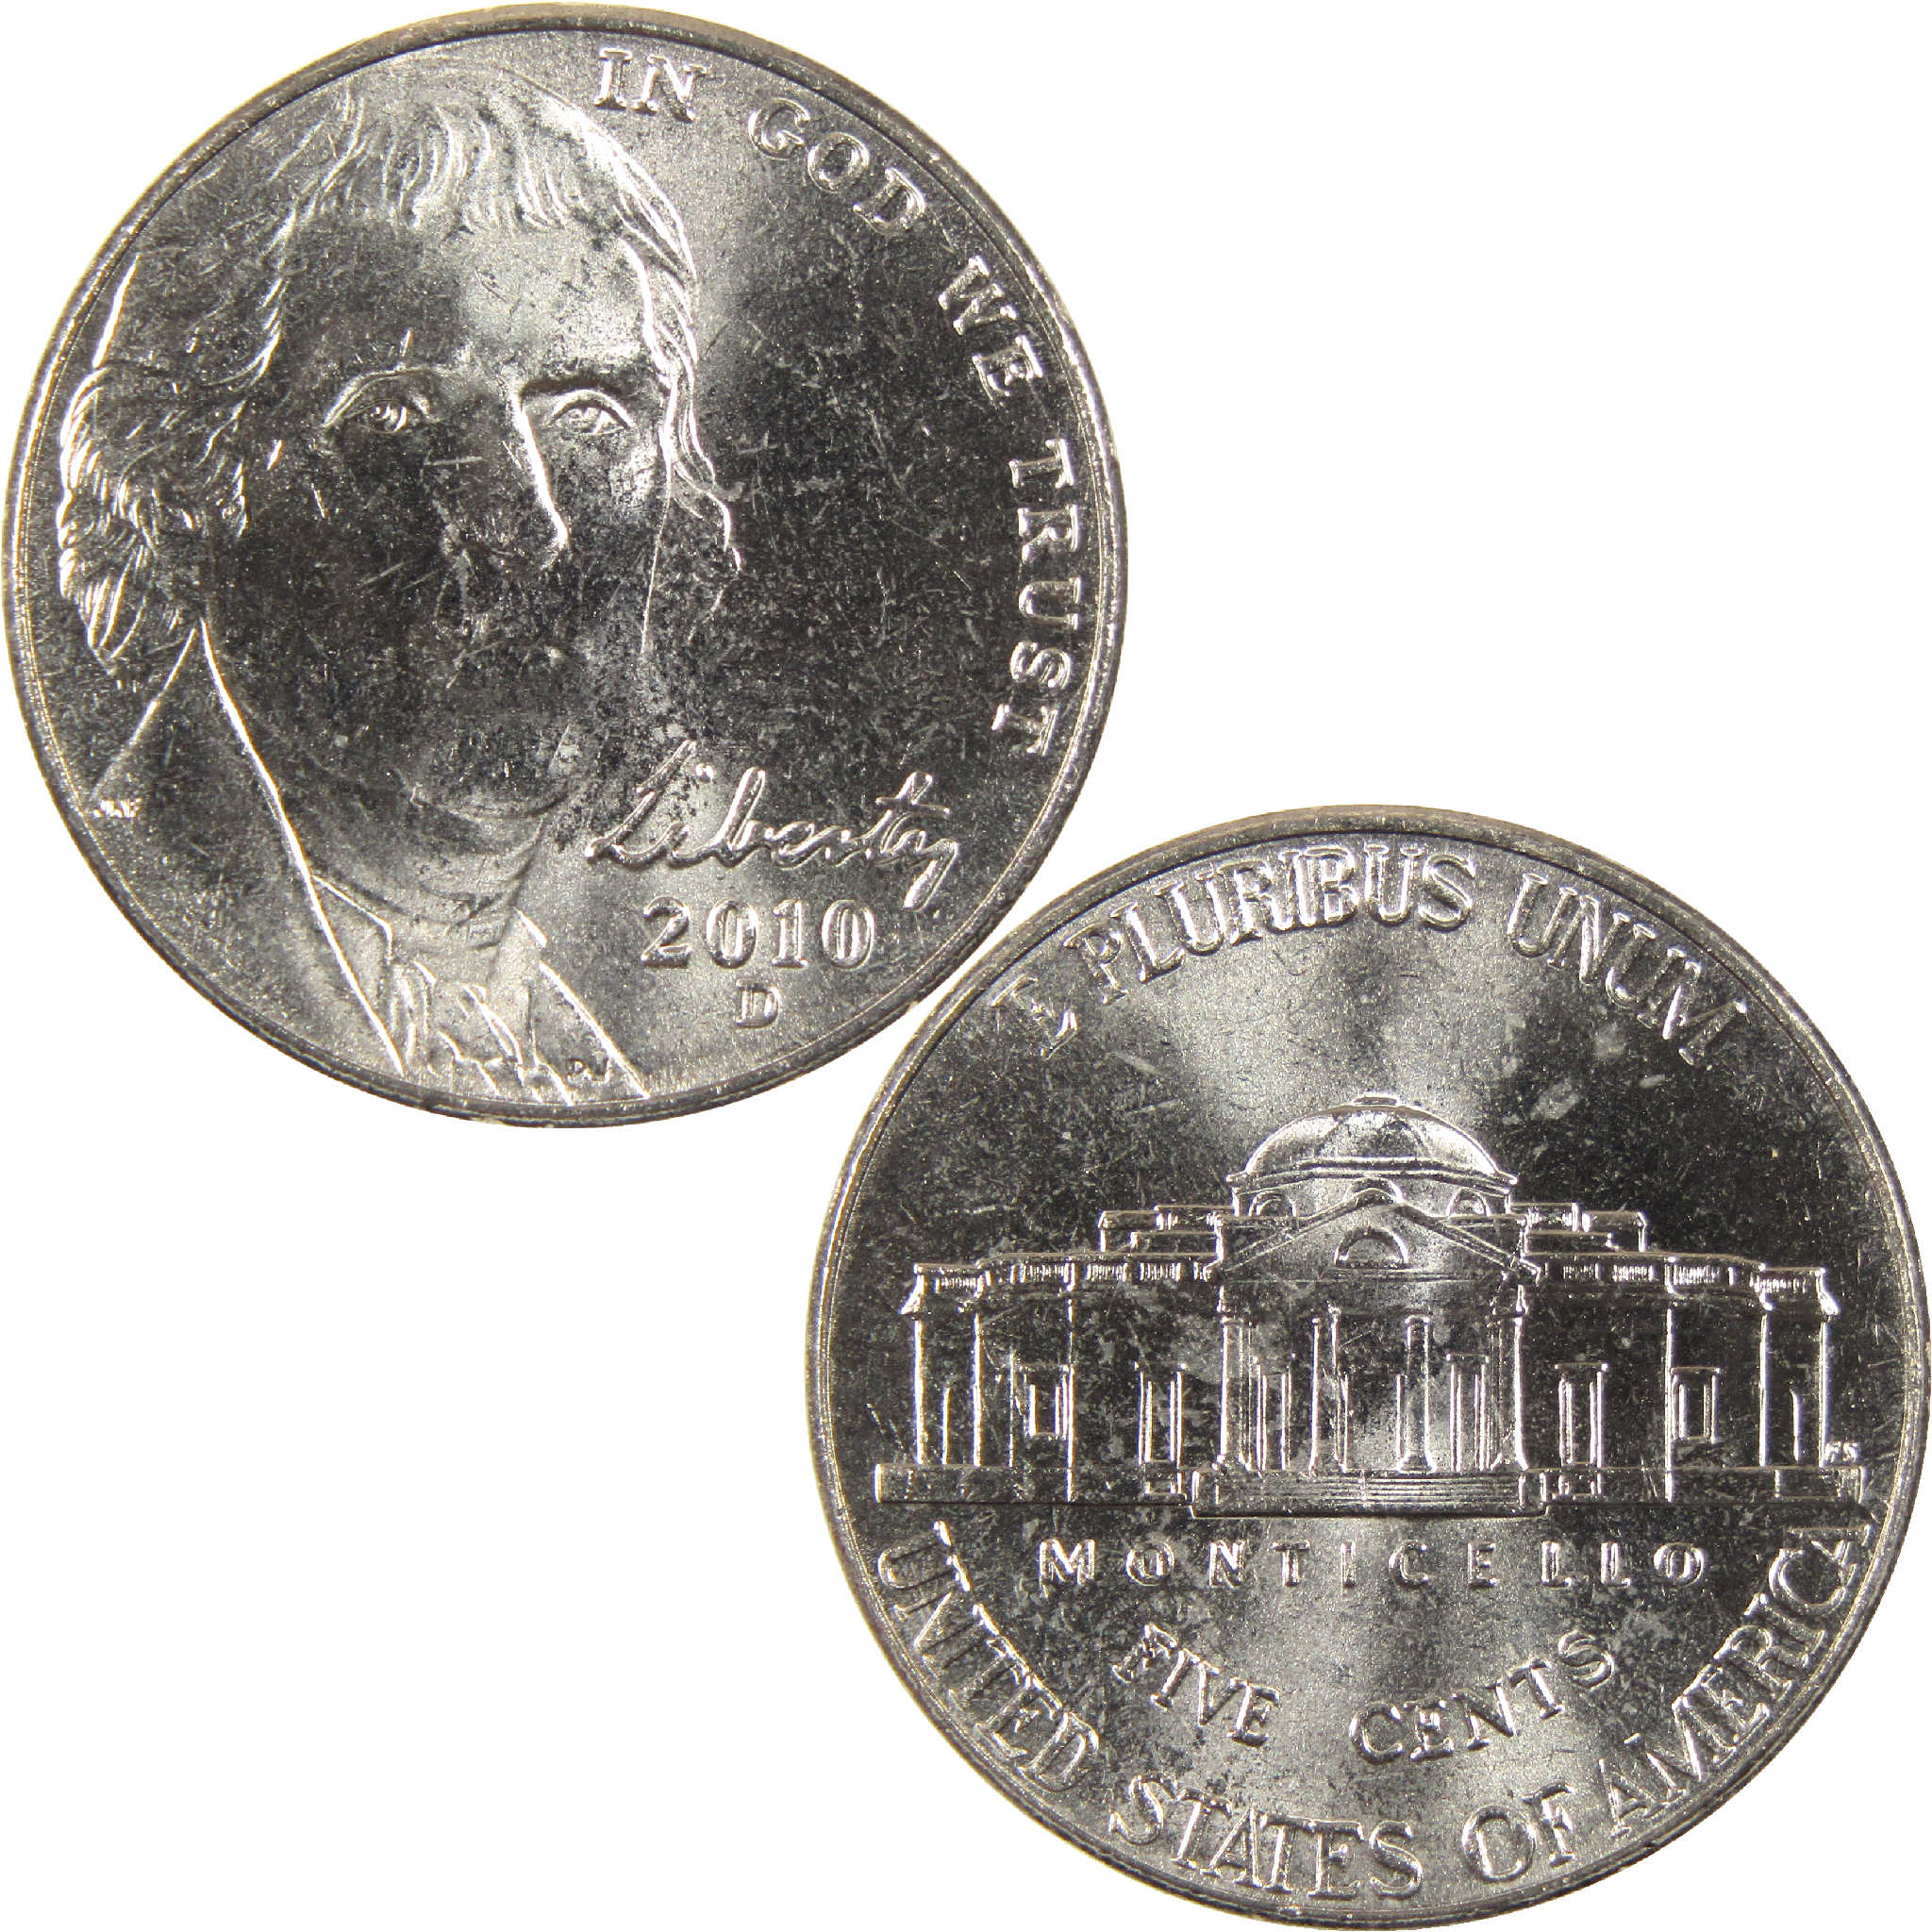 2010 D Jefferson Nickel BU Uncirculated 5c Coin